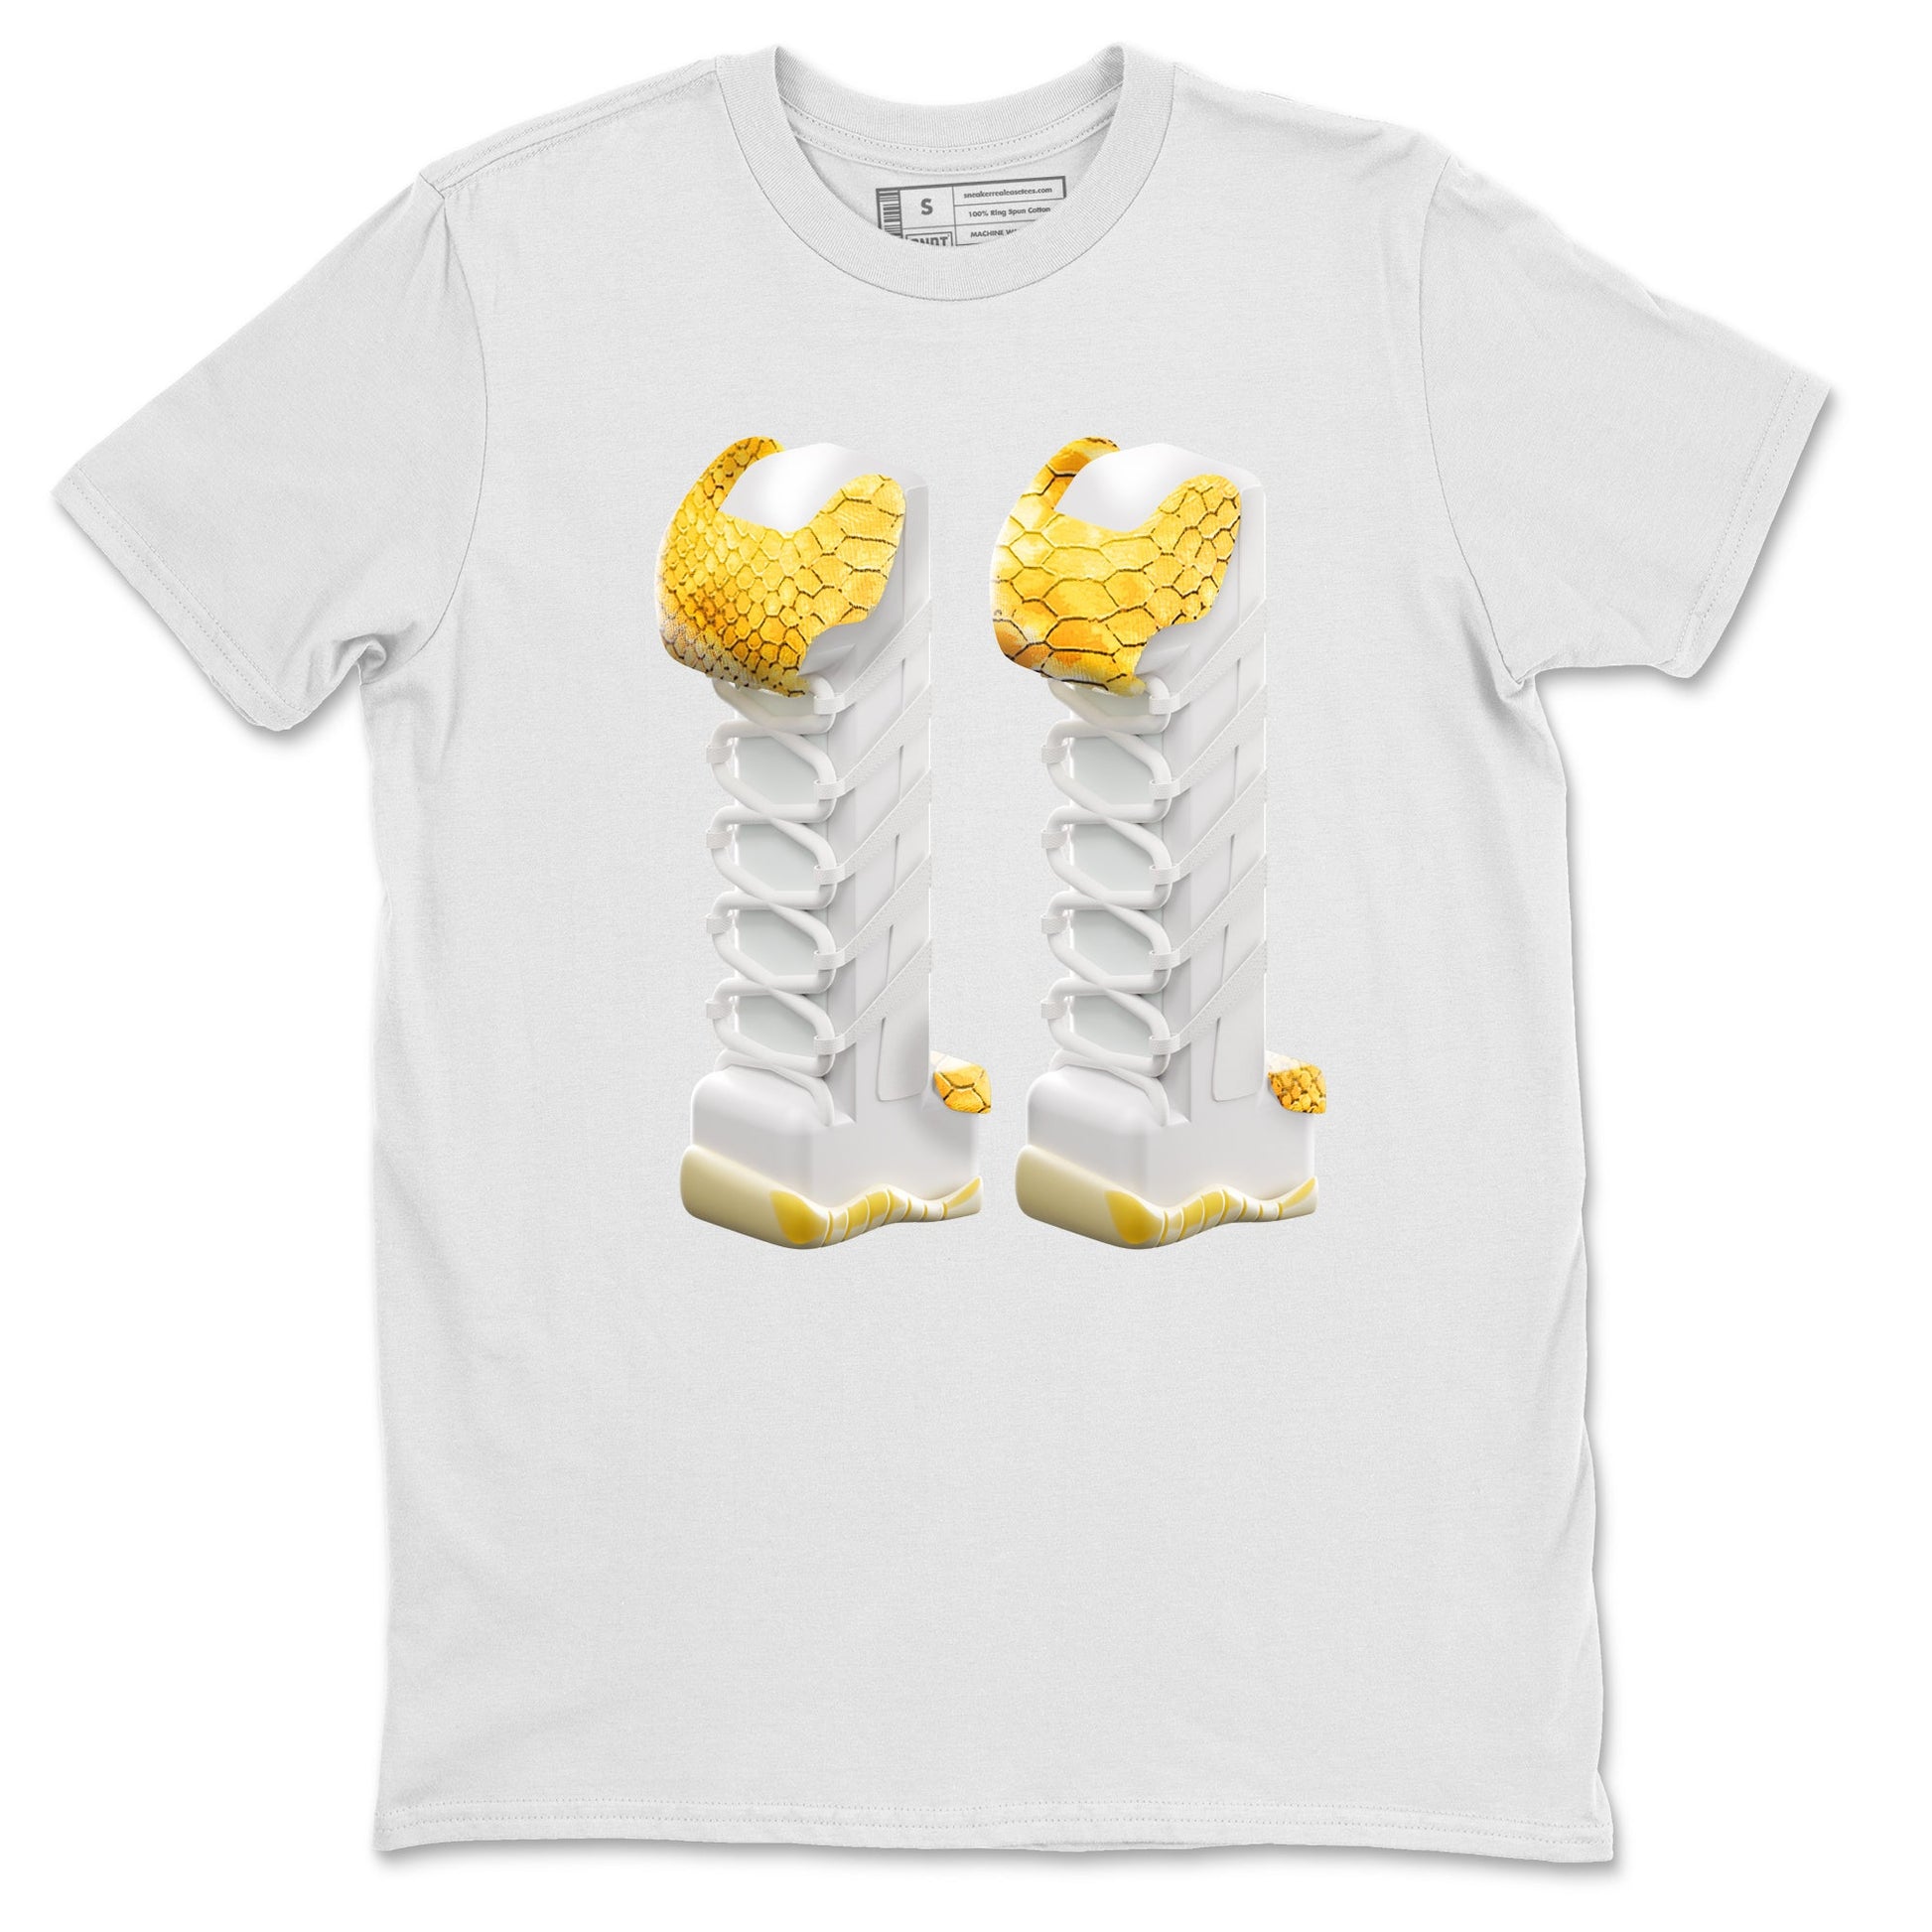 SNRT Sneaker Tee Jordan 11 Yellow Python